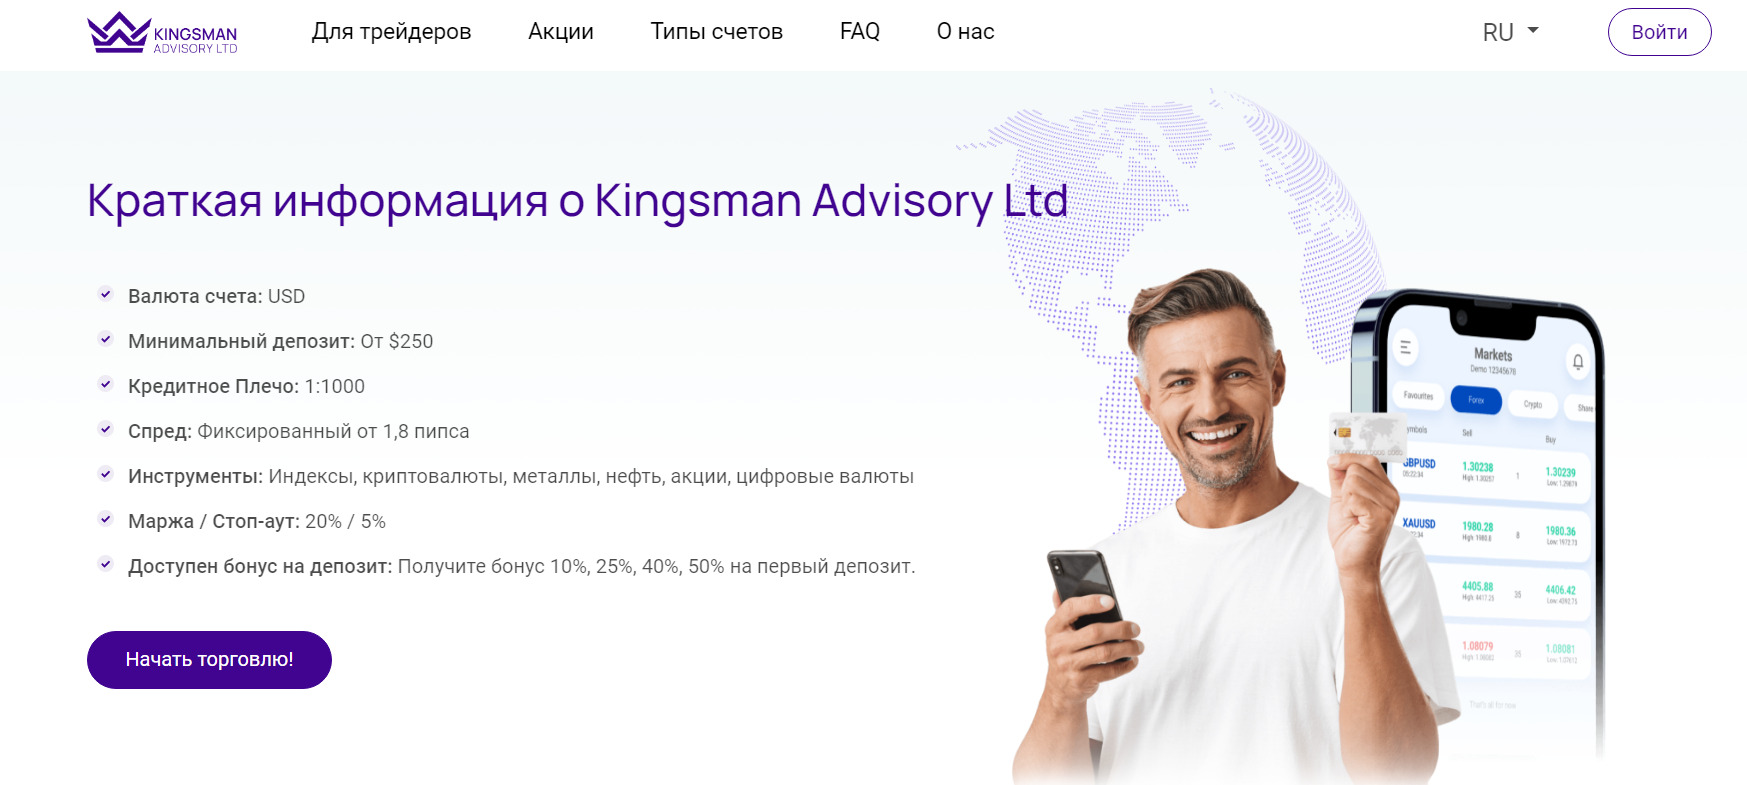 Сайт проекта Kingsman Advisory